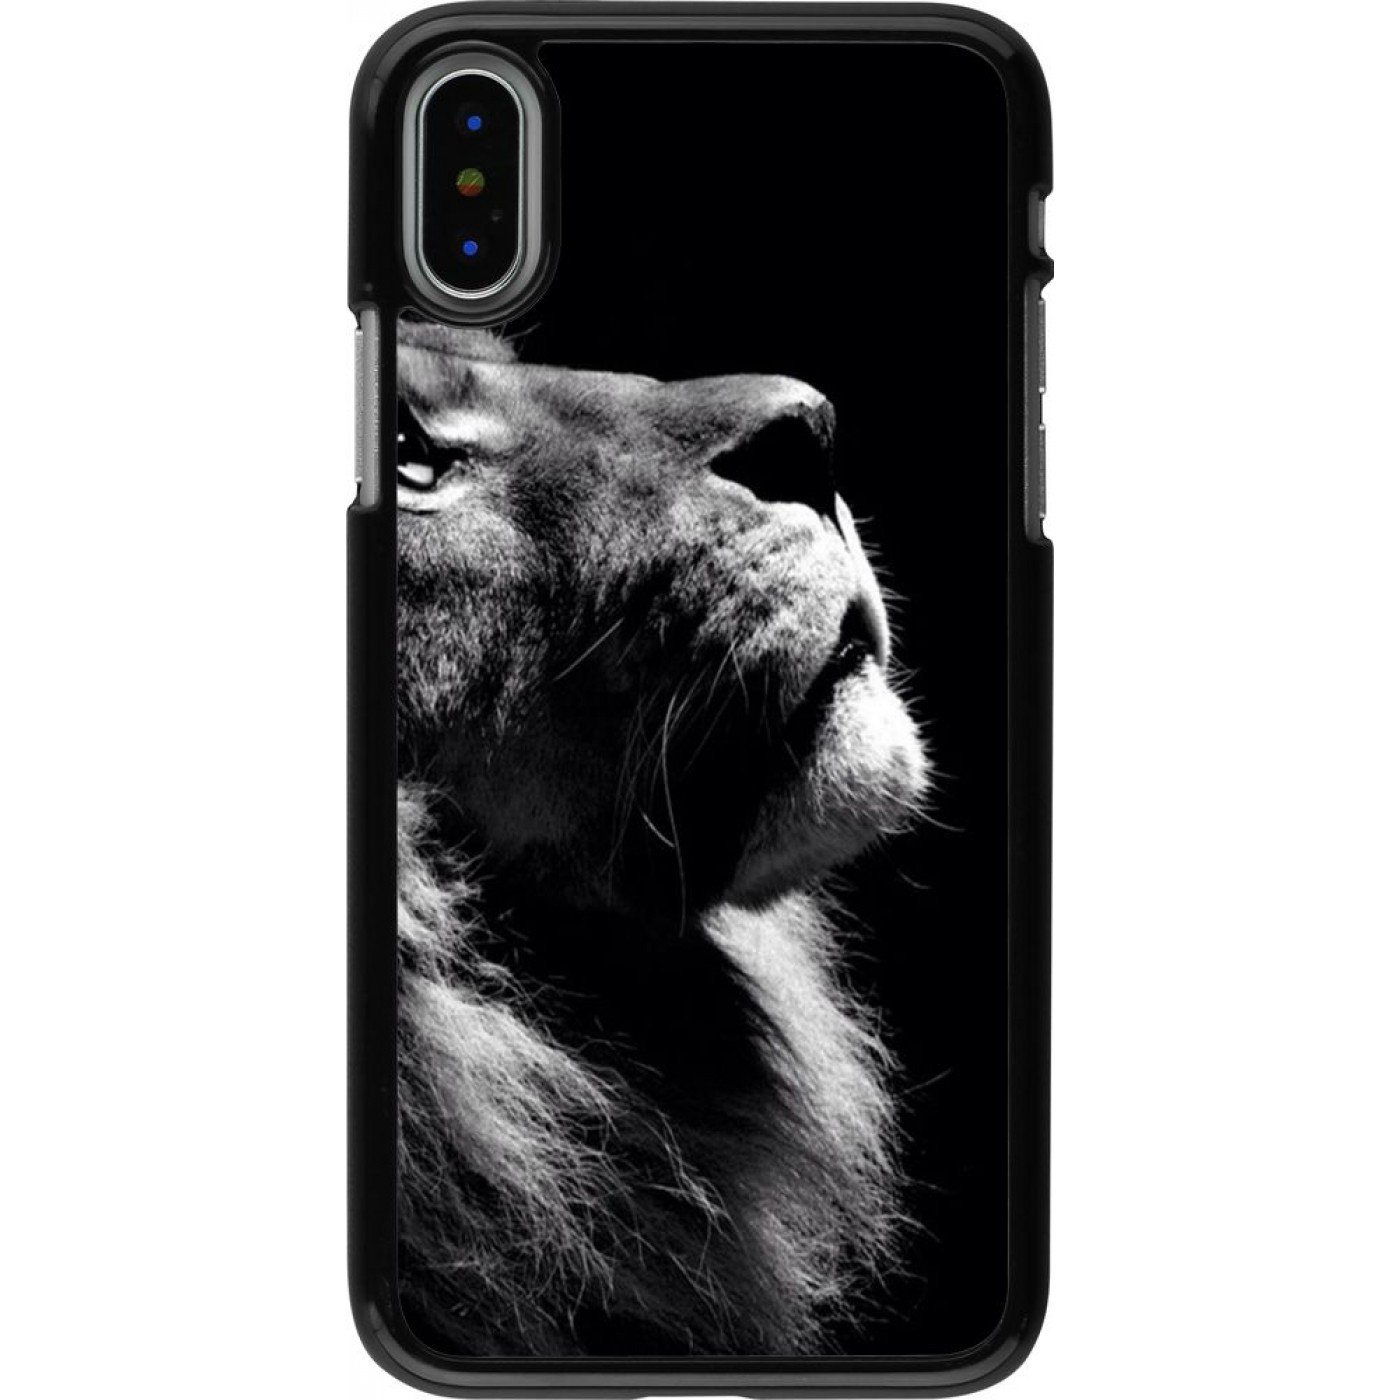 coque iphone xs lion